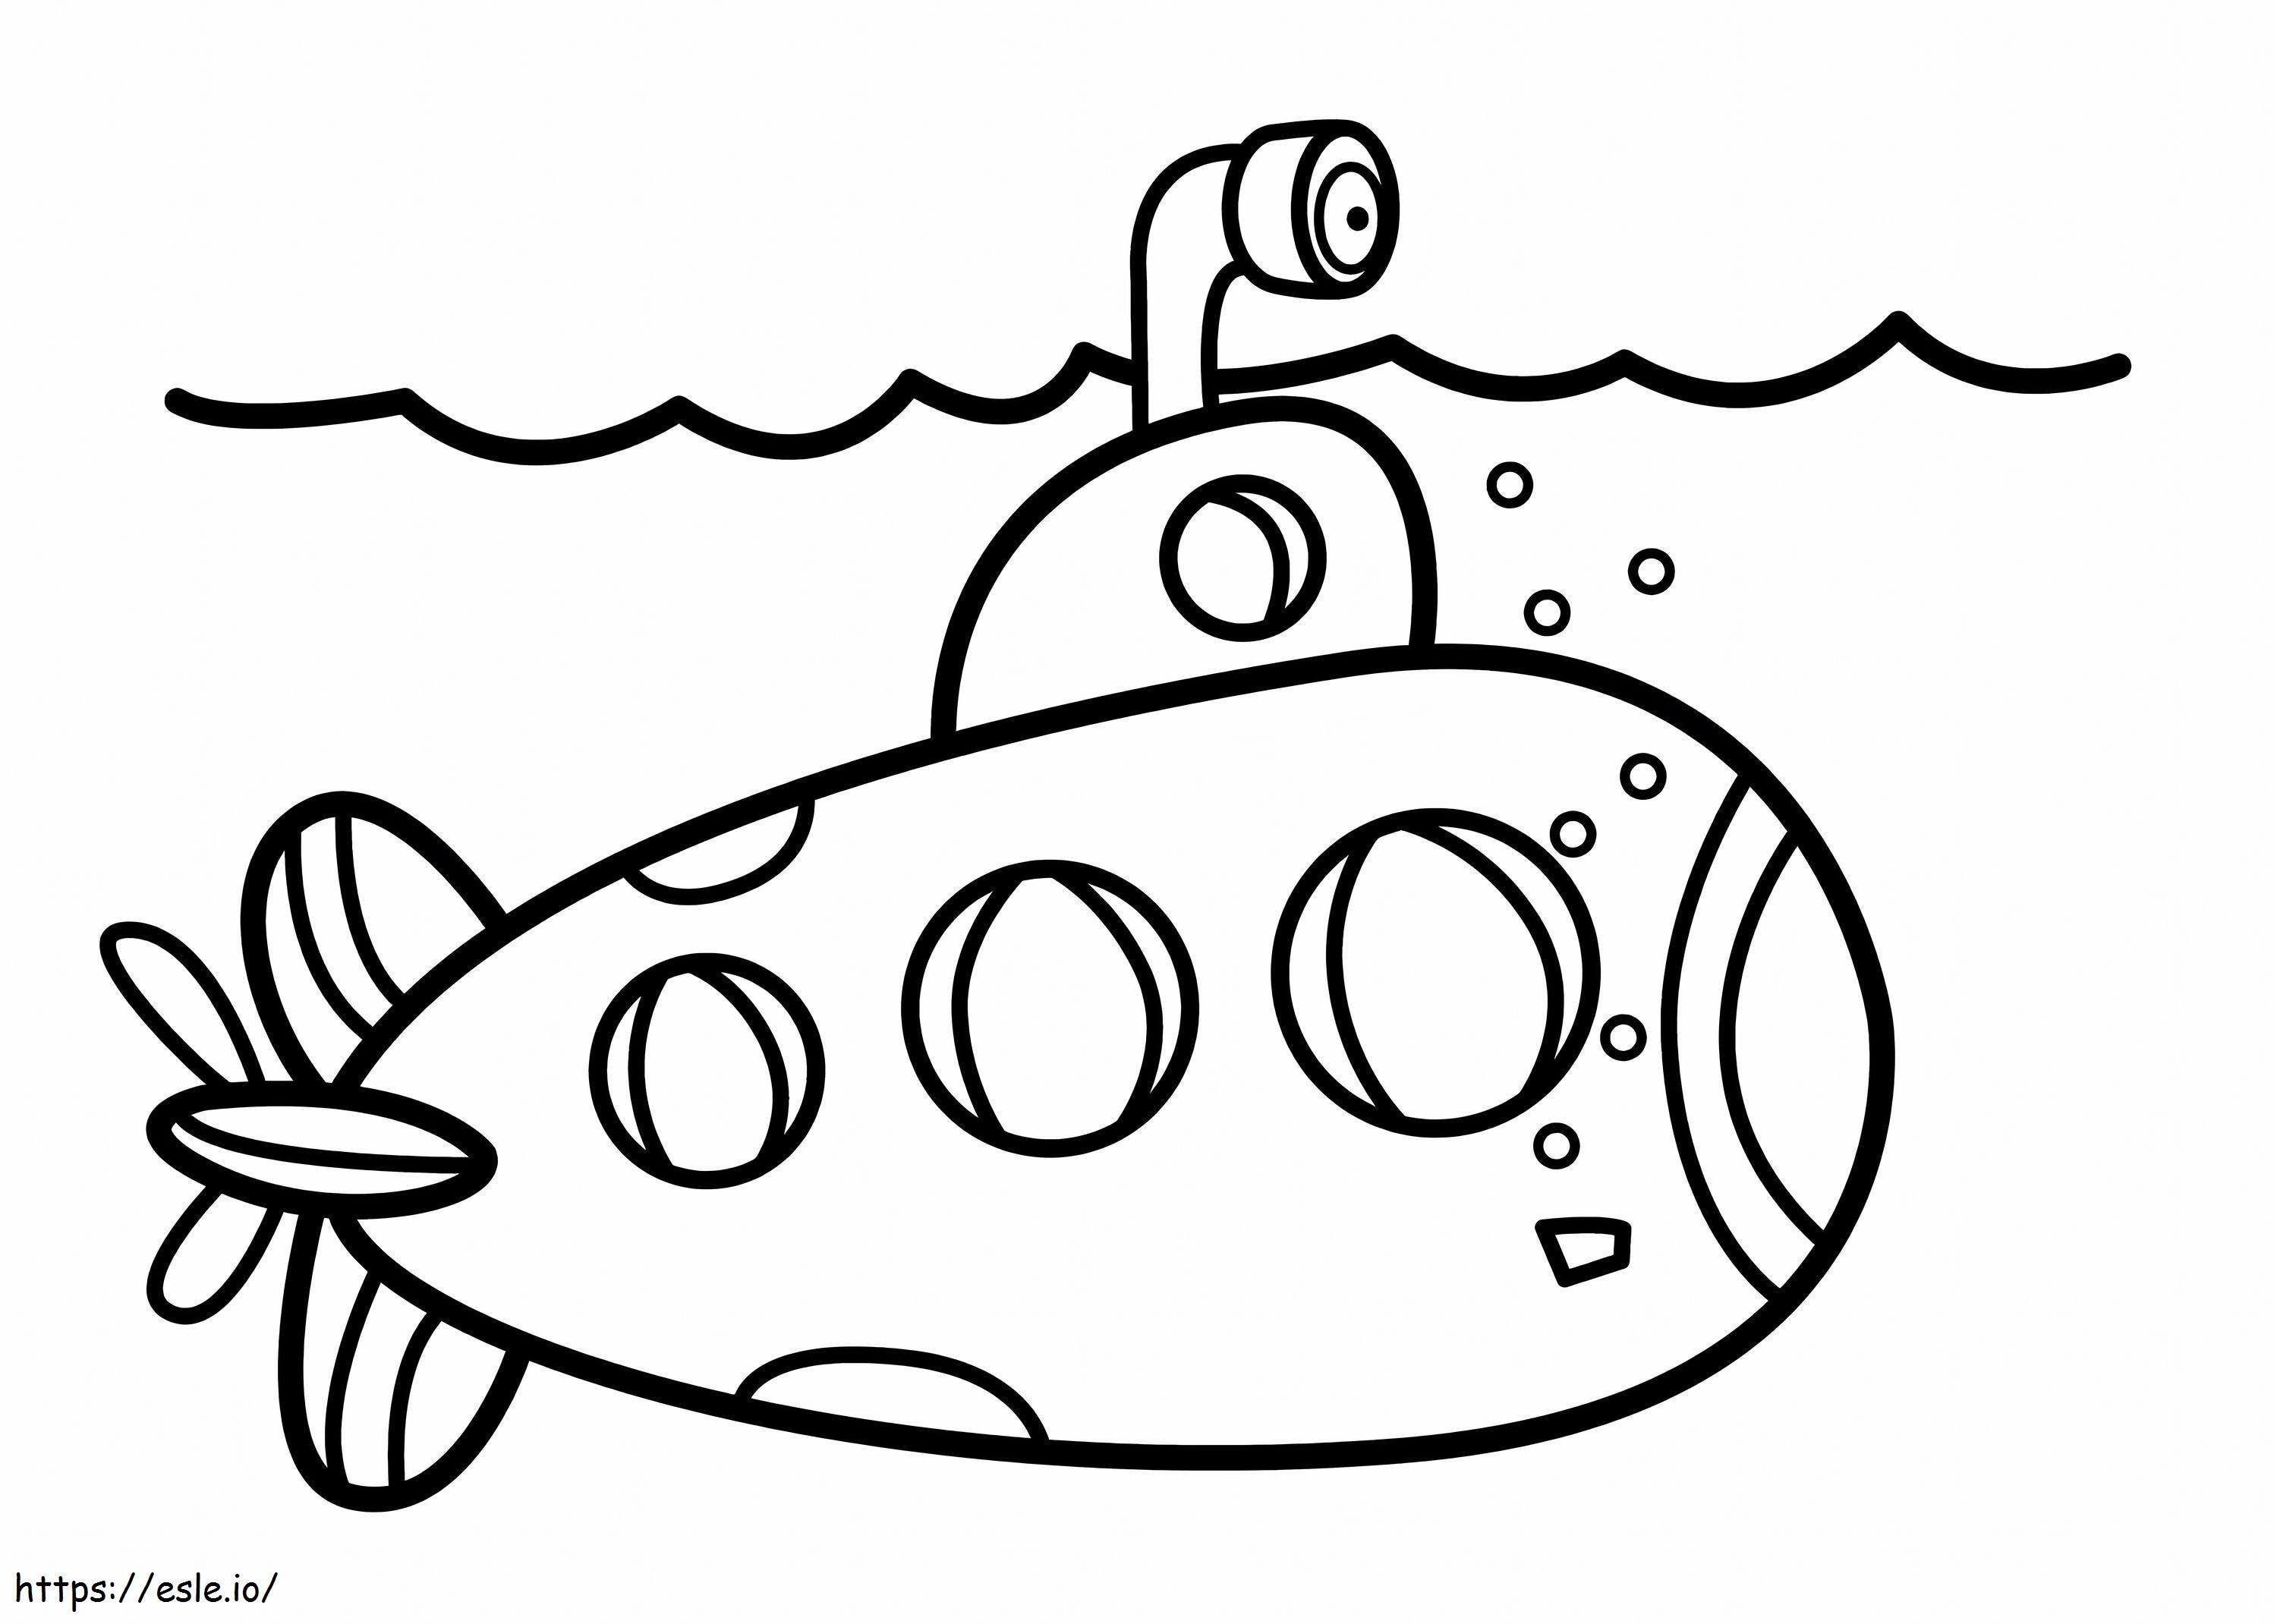 Basic Submarine coloring page